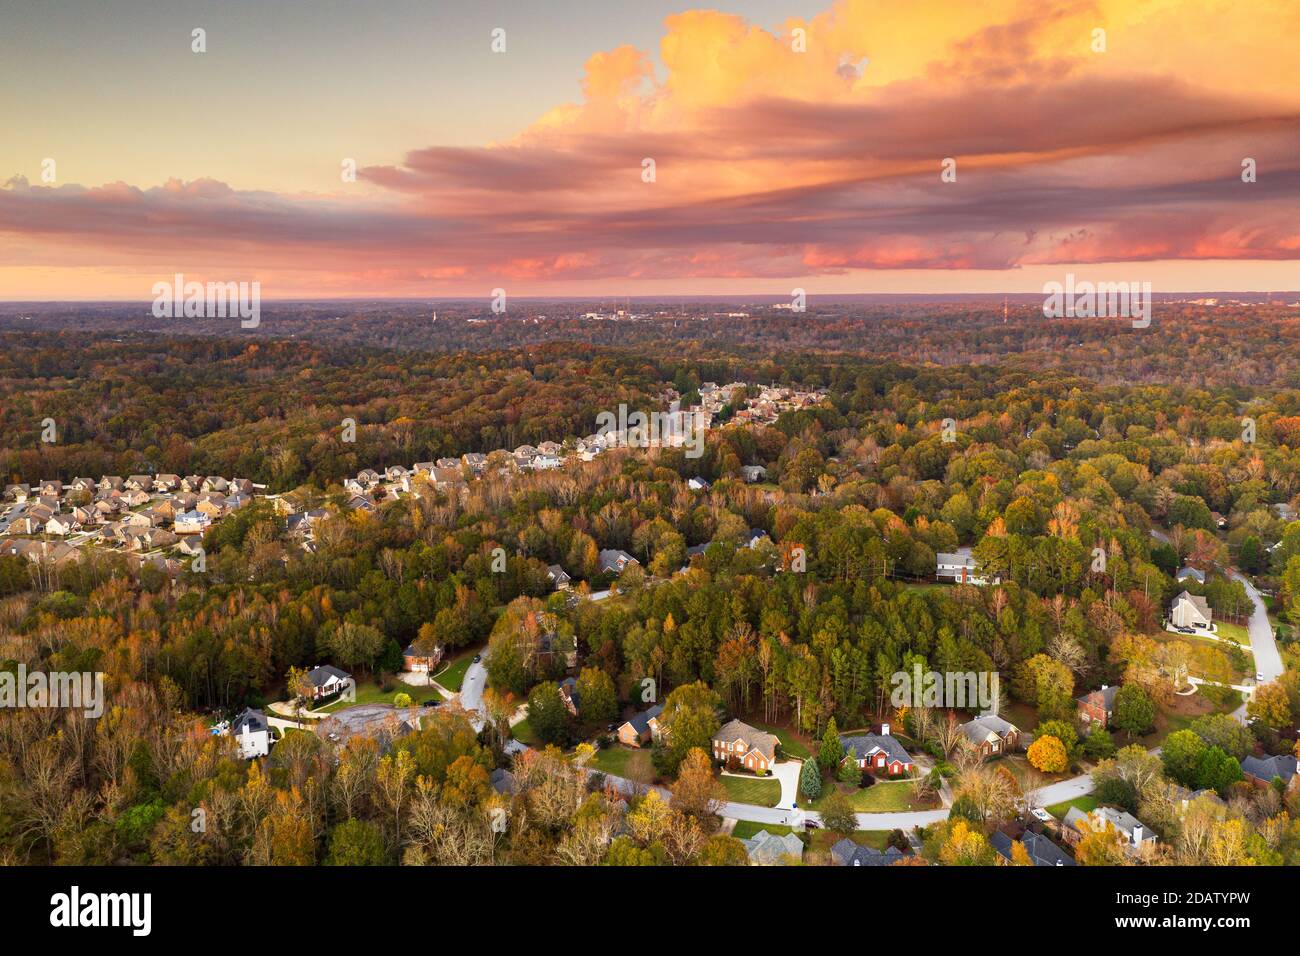 Suburban neighborhoods viewed from above during an autumn dusk. Stock Photo